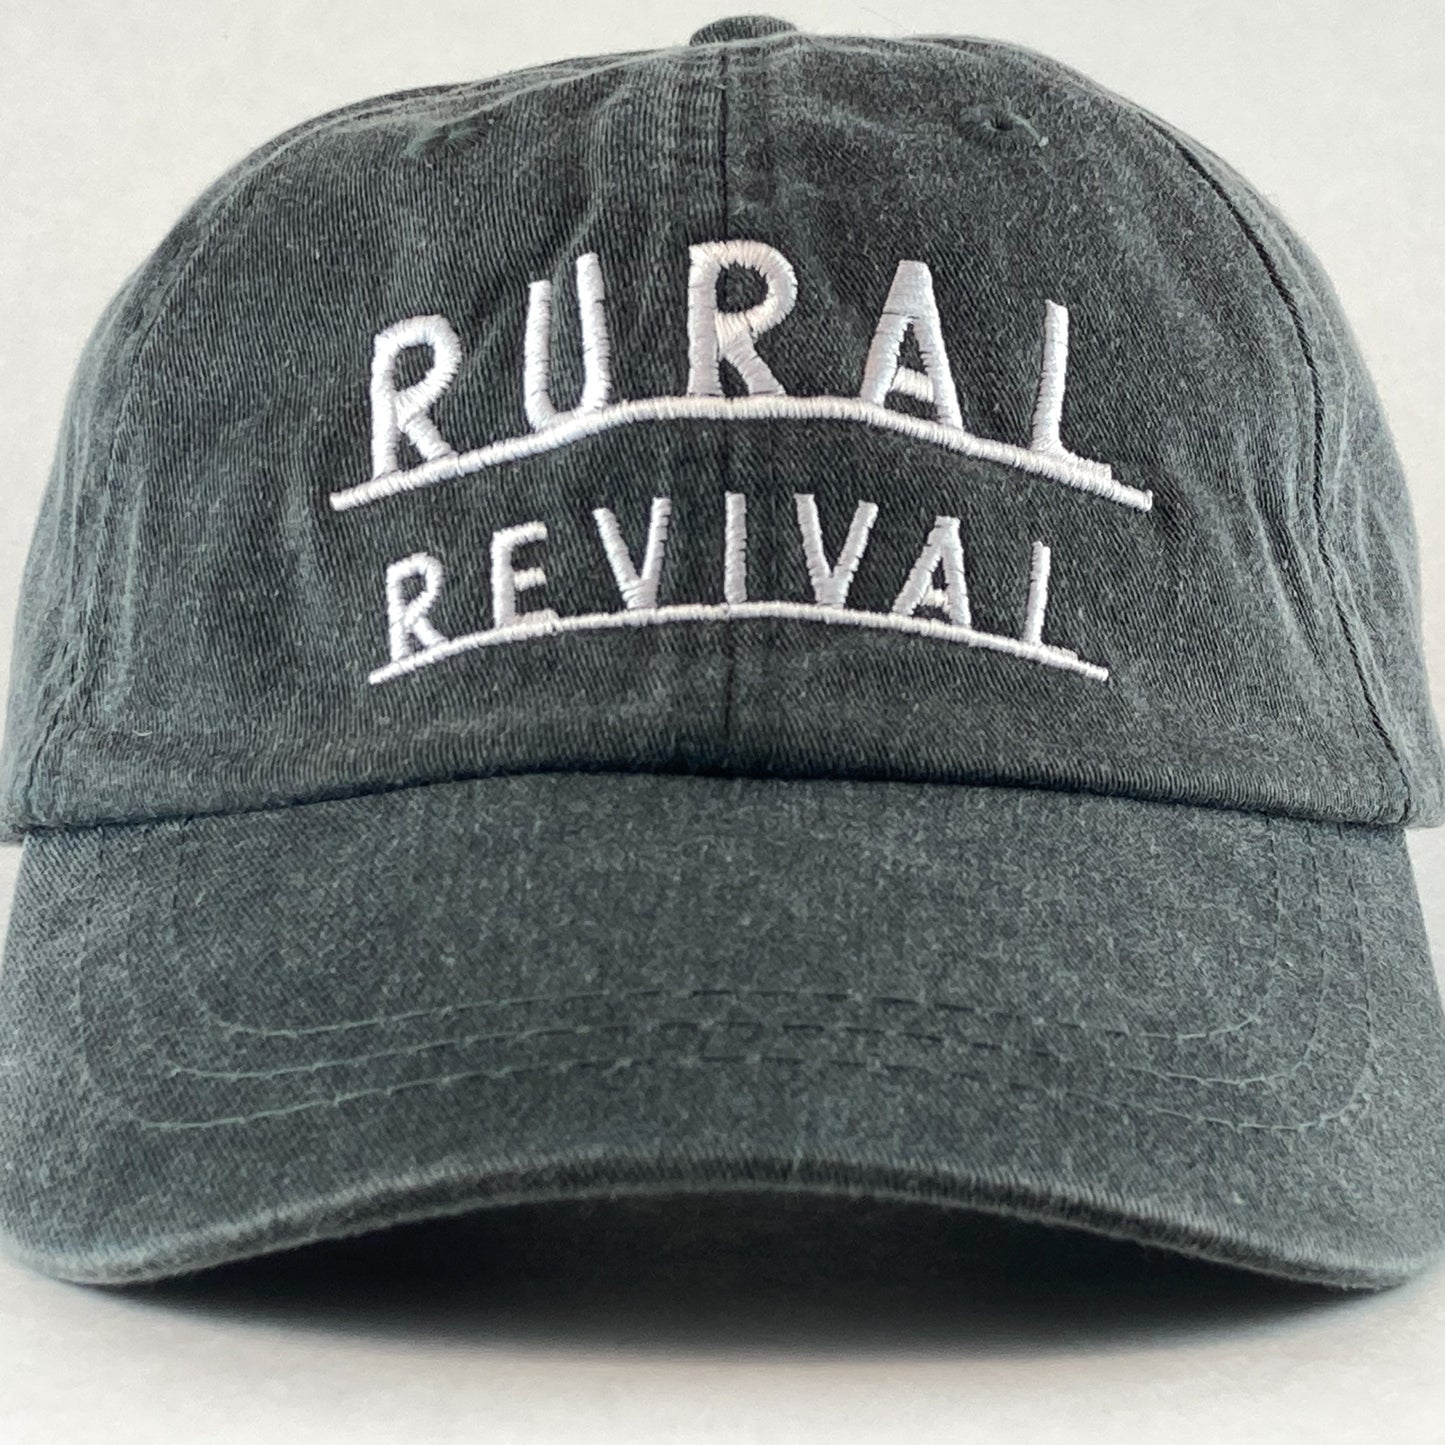 Rural Revival Charcoal